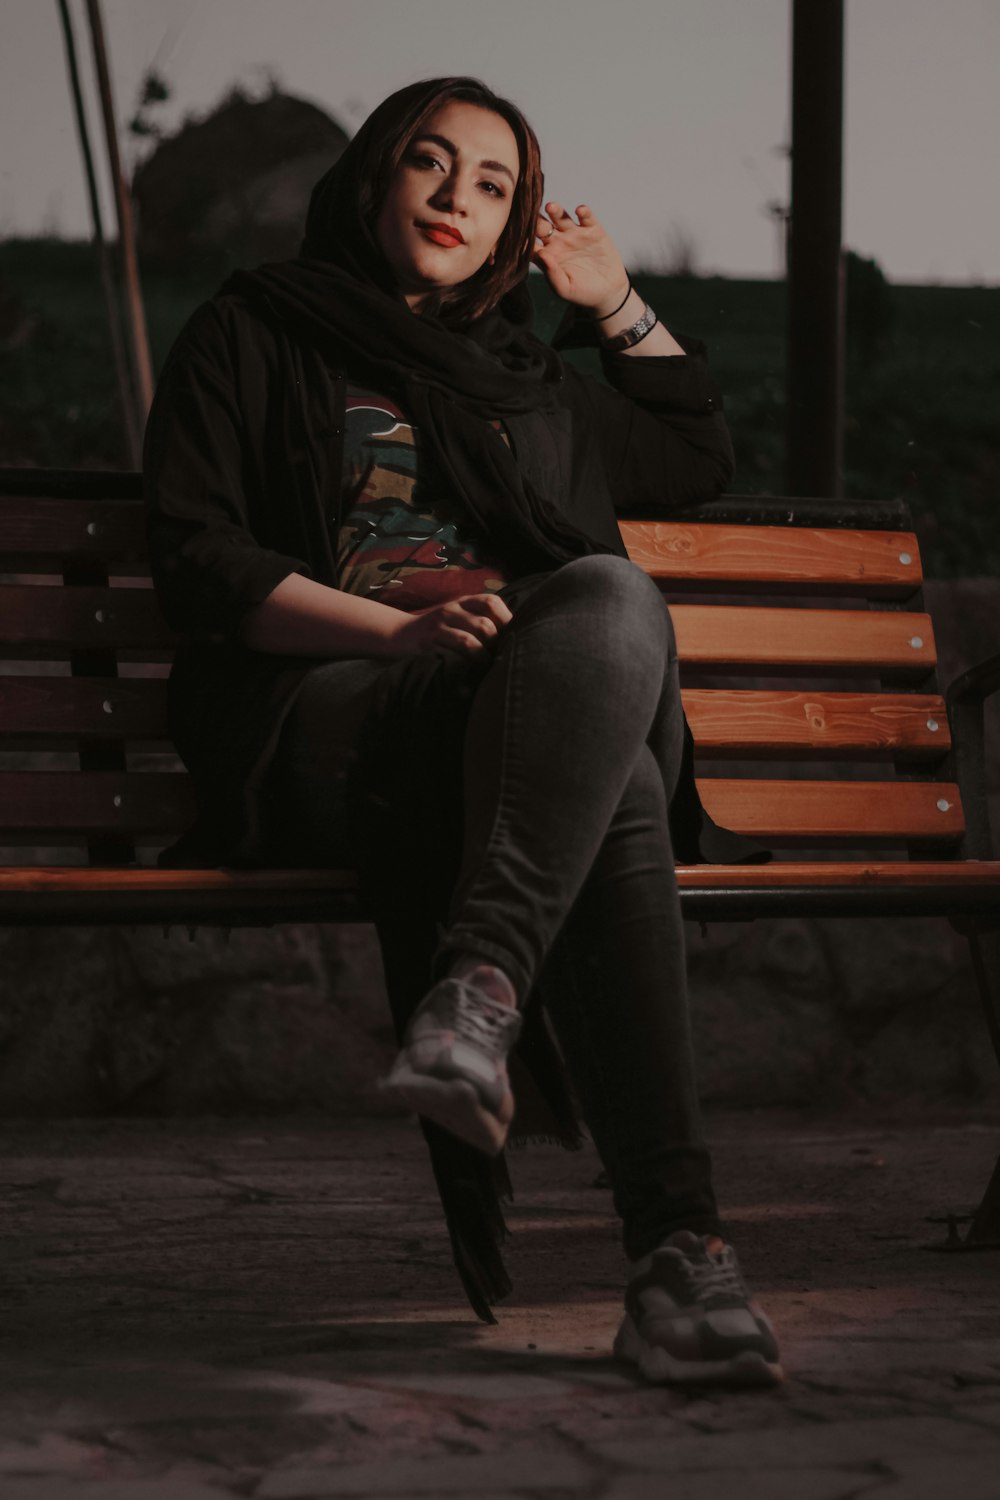 a woman sitting on a bench smoking a cigarette